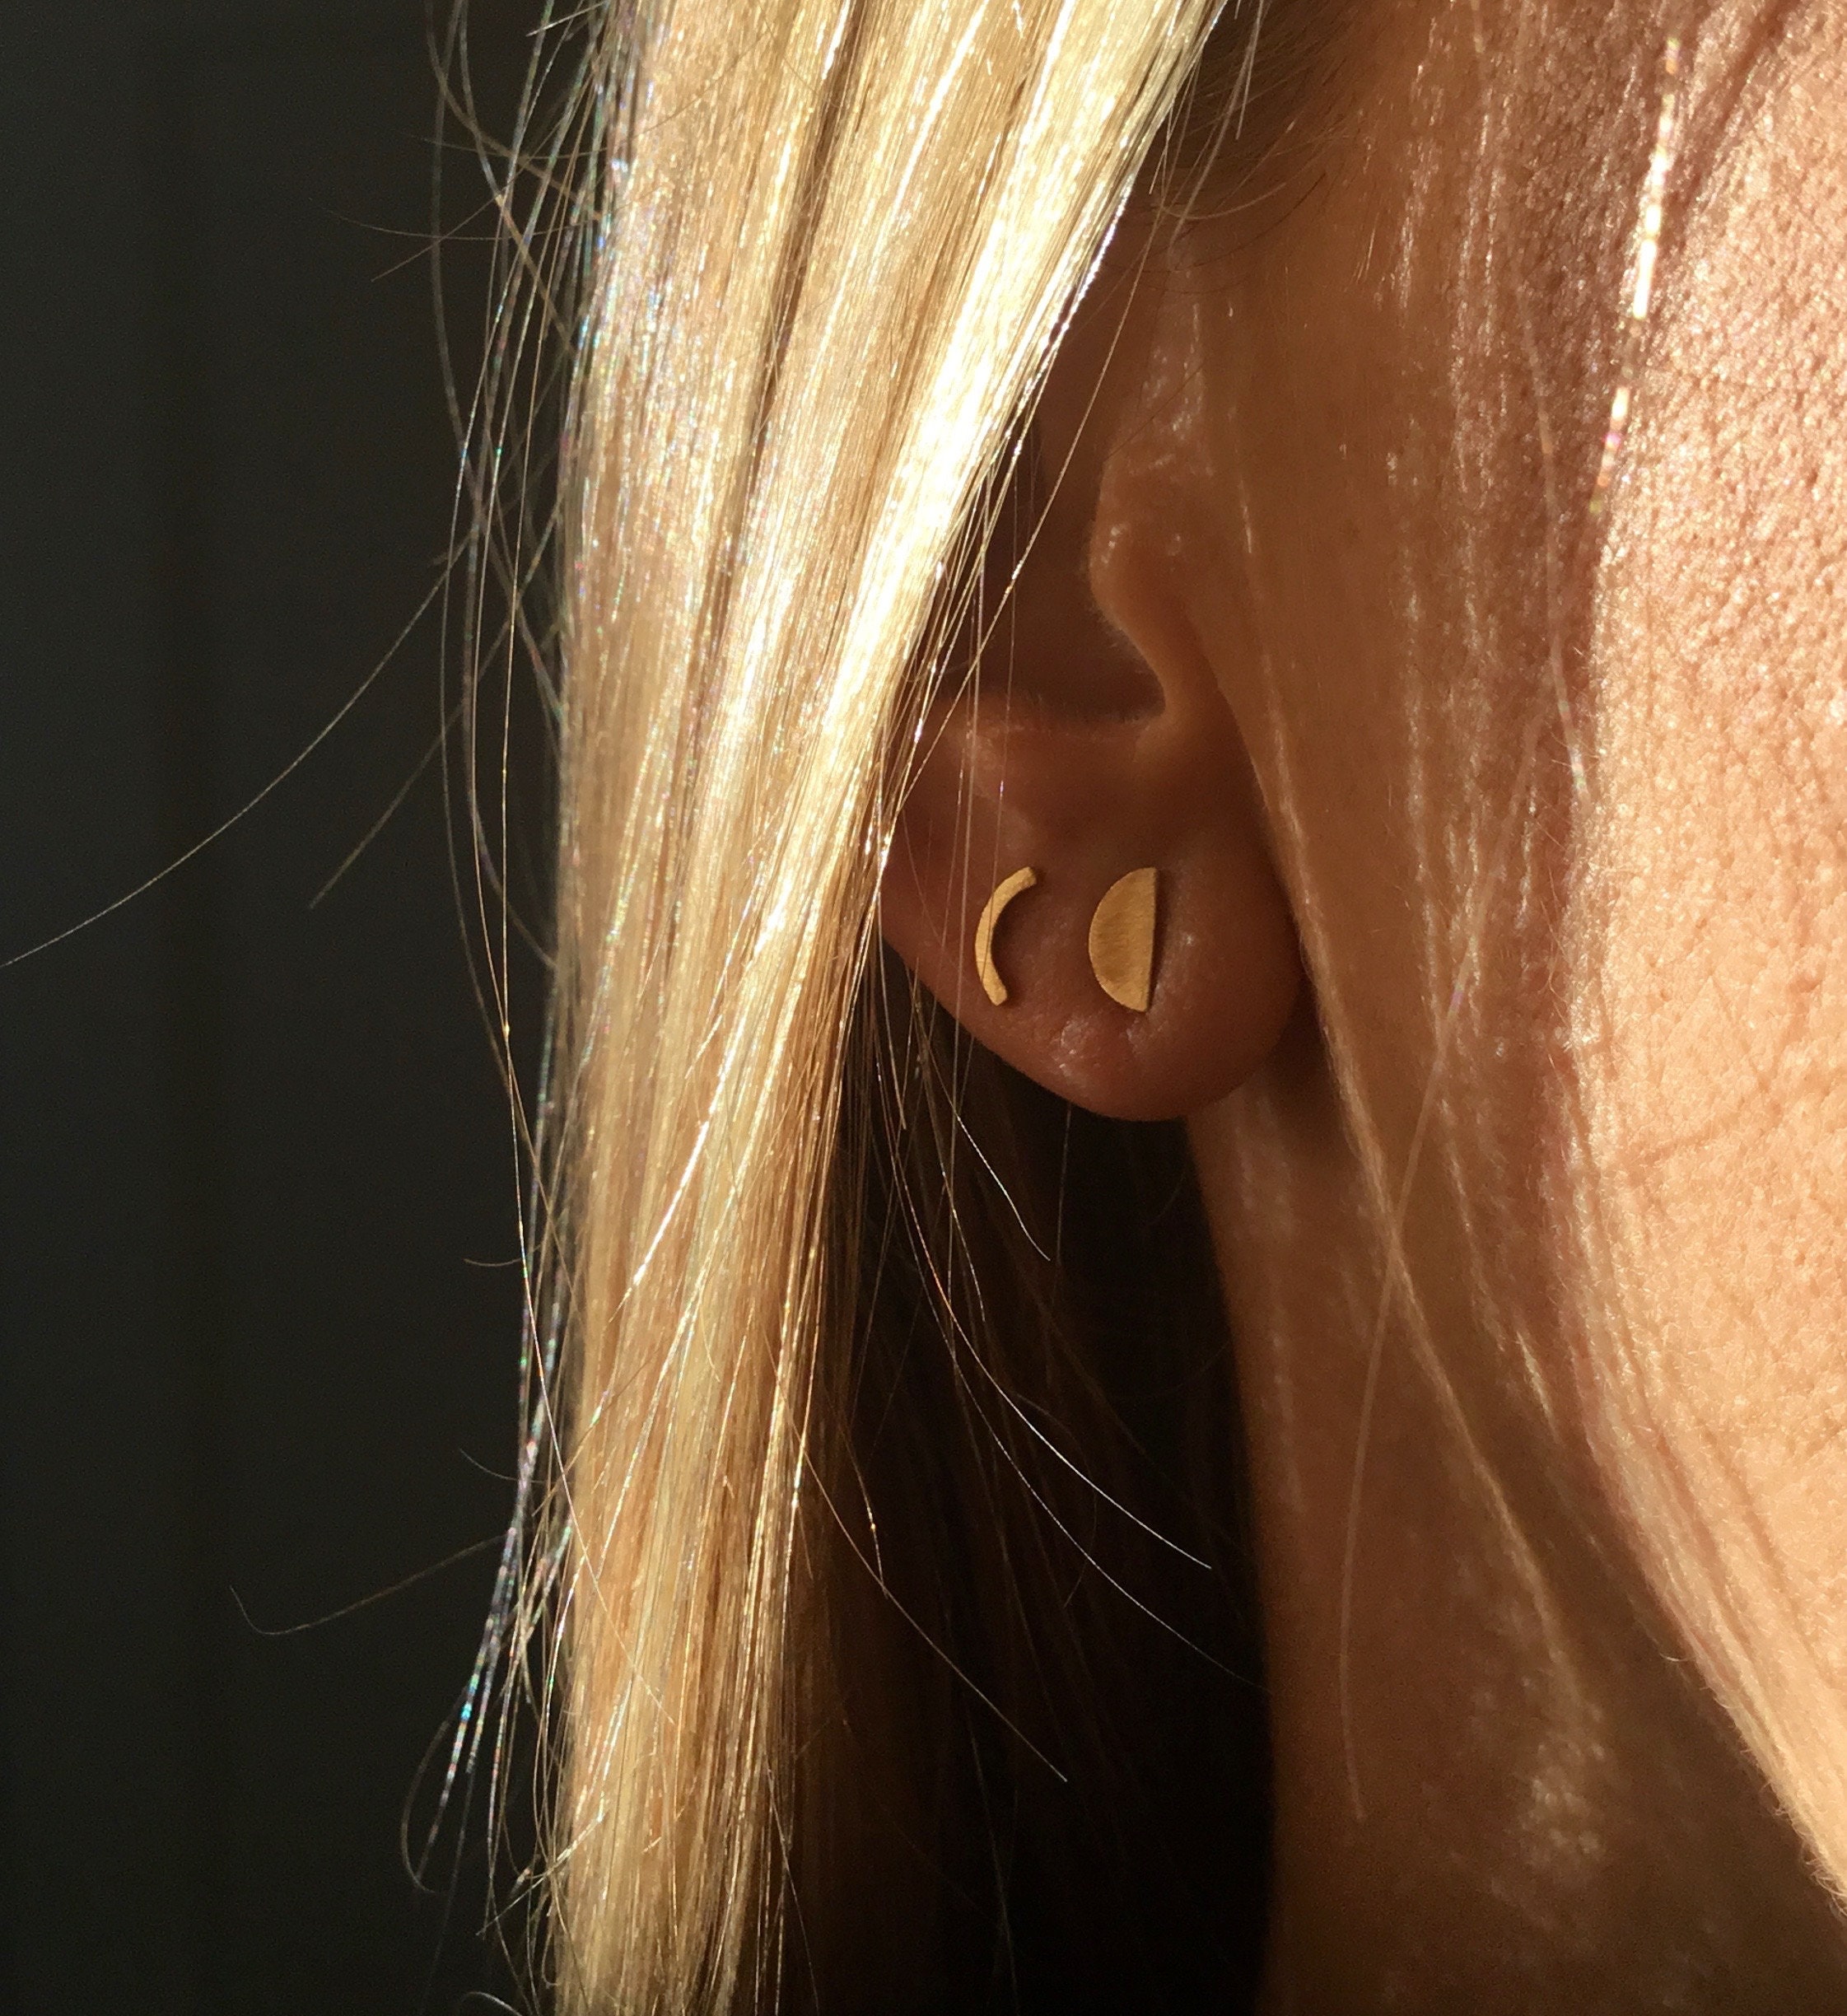 Solid Gold Stud Earrings, Small Mismatched Moon Minimalist Earrings UK